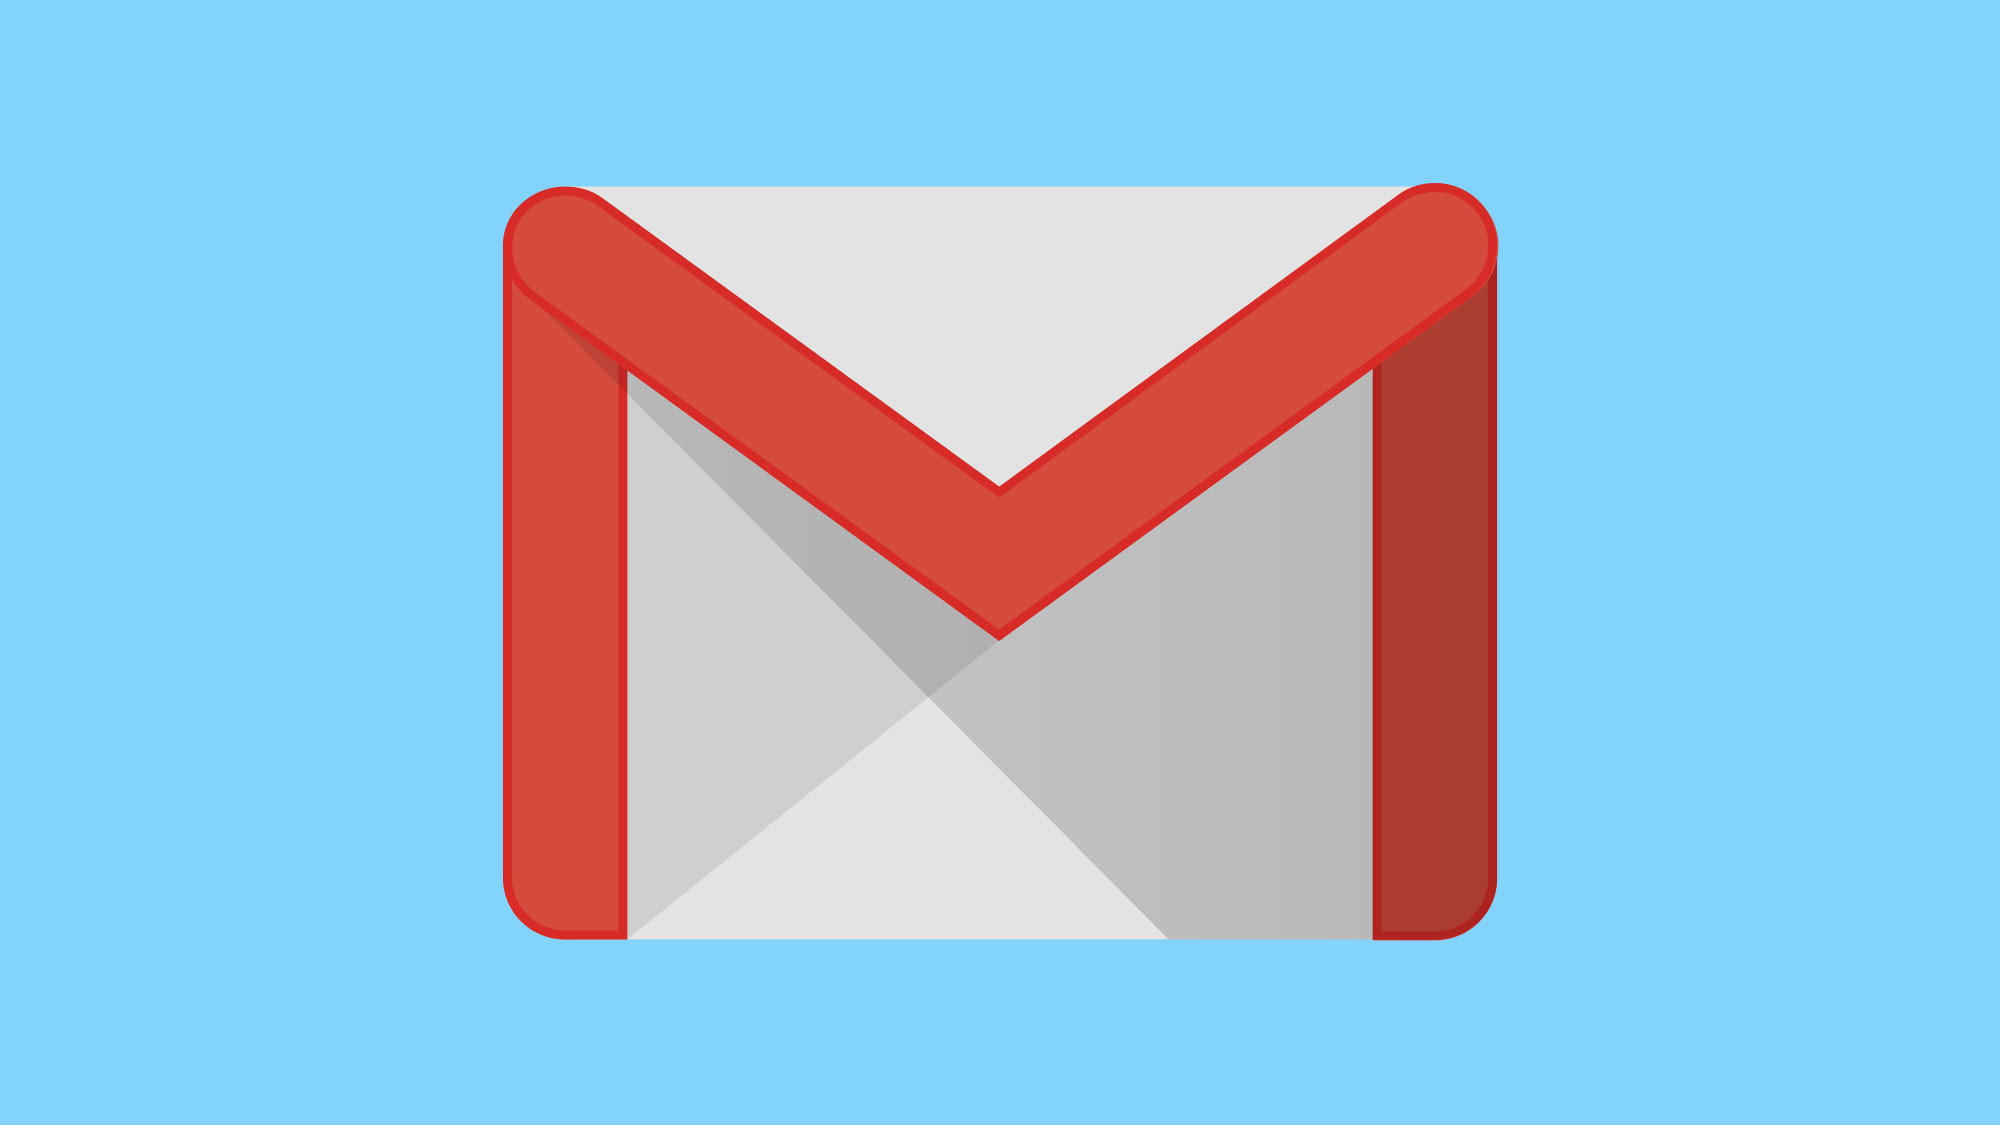 K gmail com. Gmail почта. Иконка gmail. Электронная почта гугл.